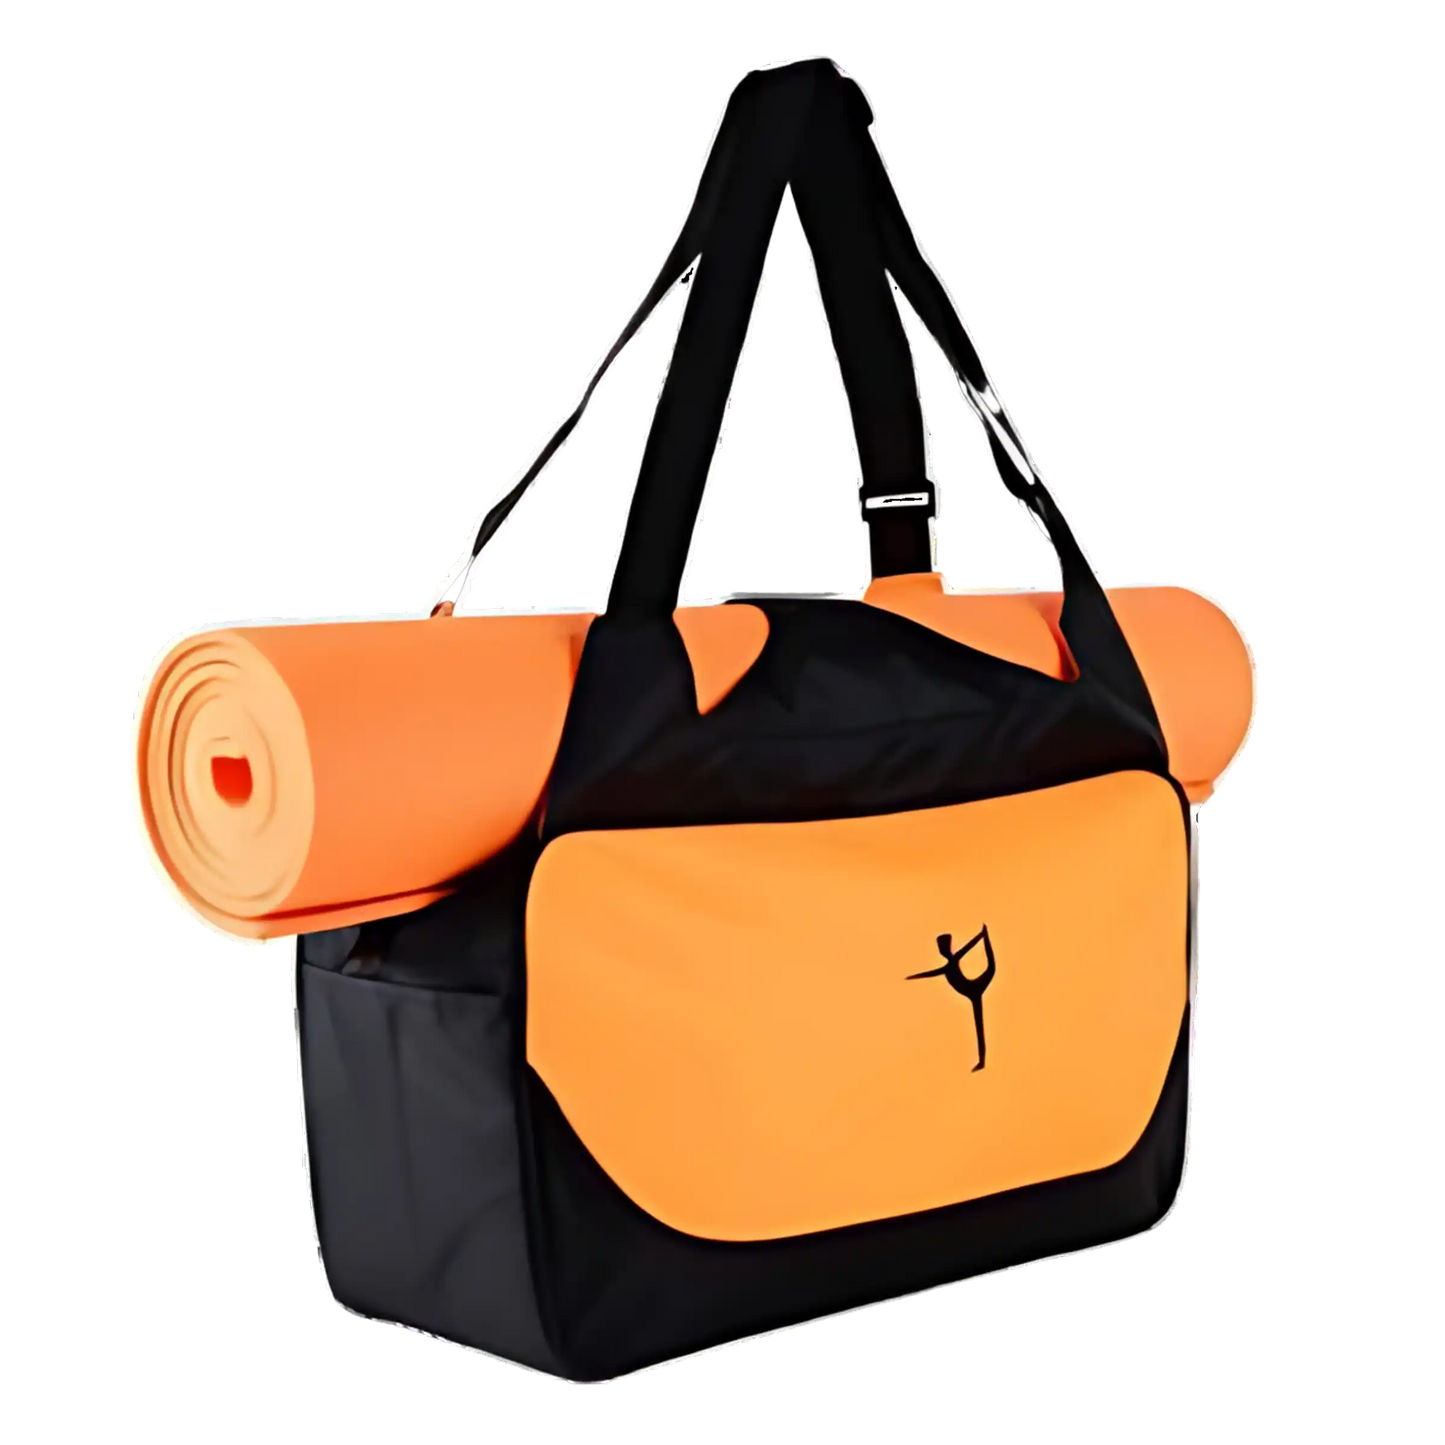 WATERPROOF YOGA MAT CARRIER BACKPACK - Orange - Yoga Bag